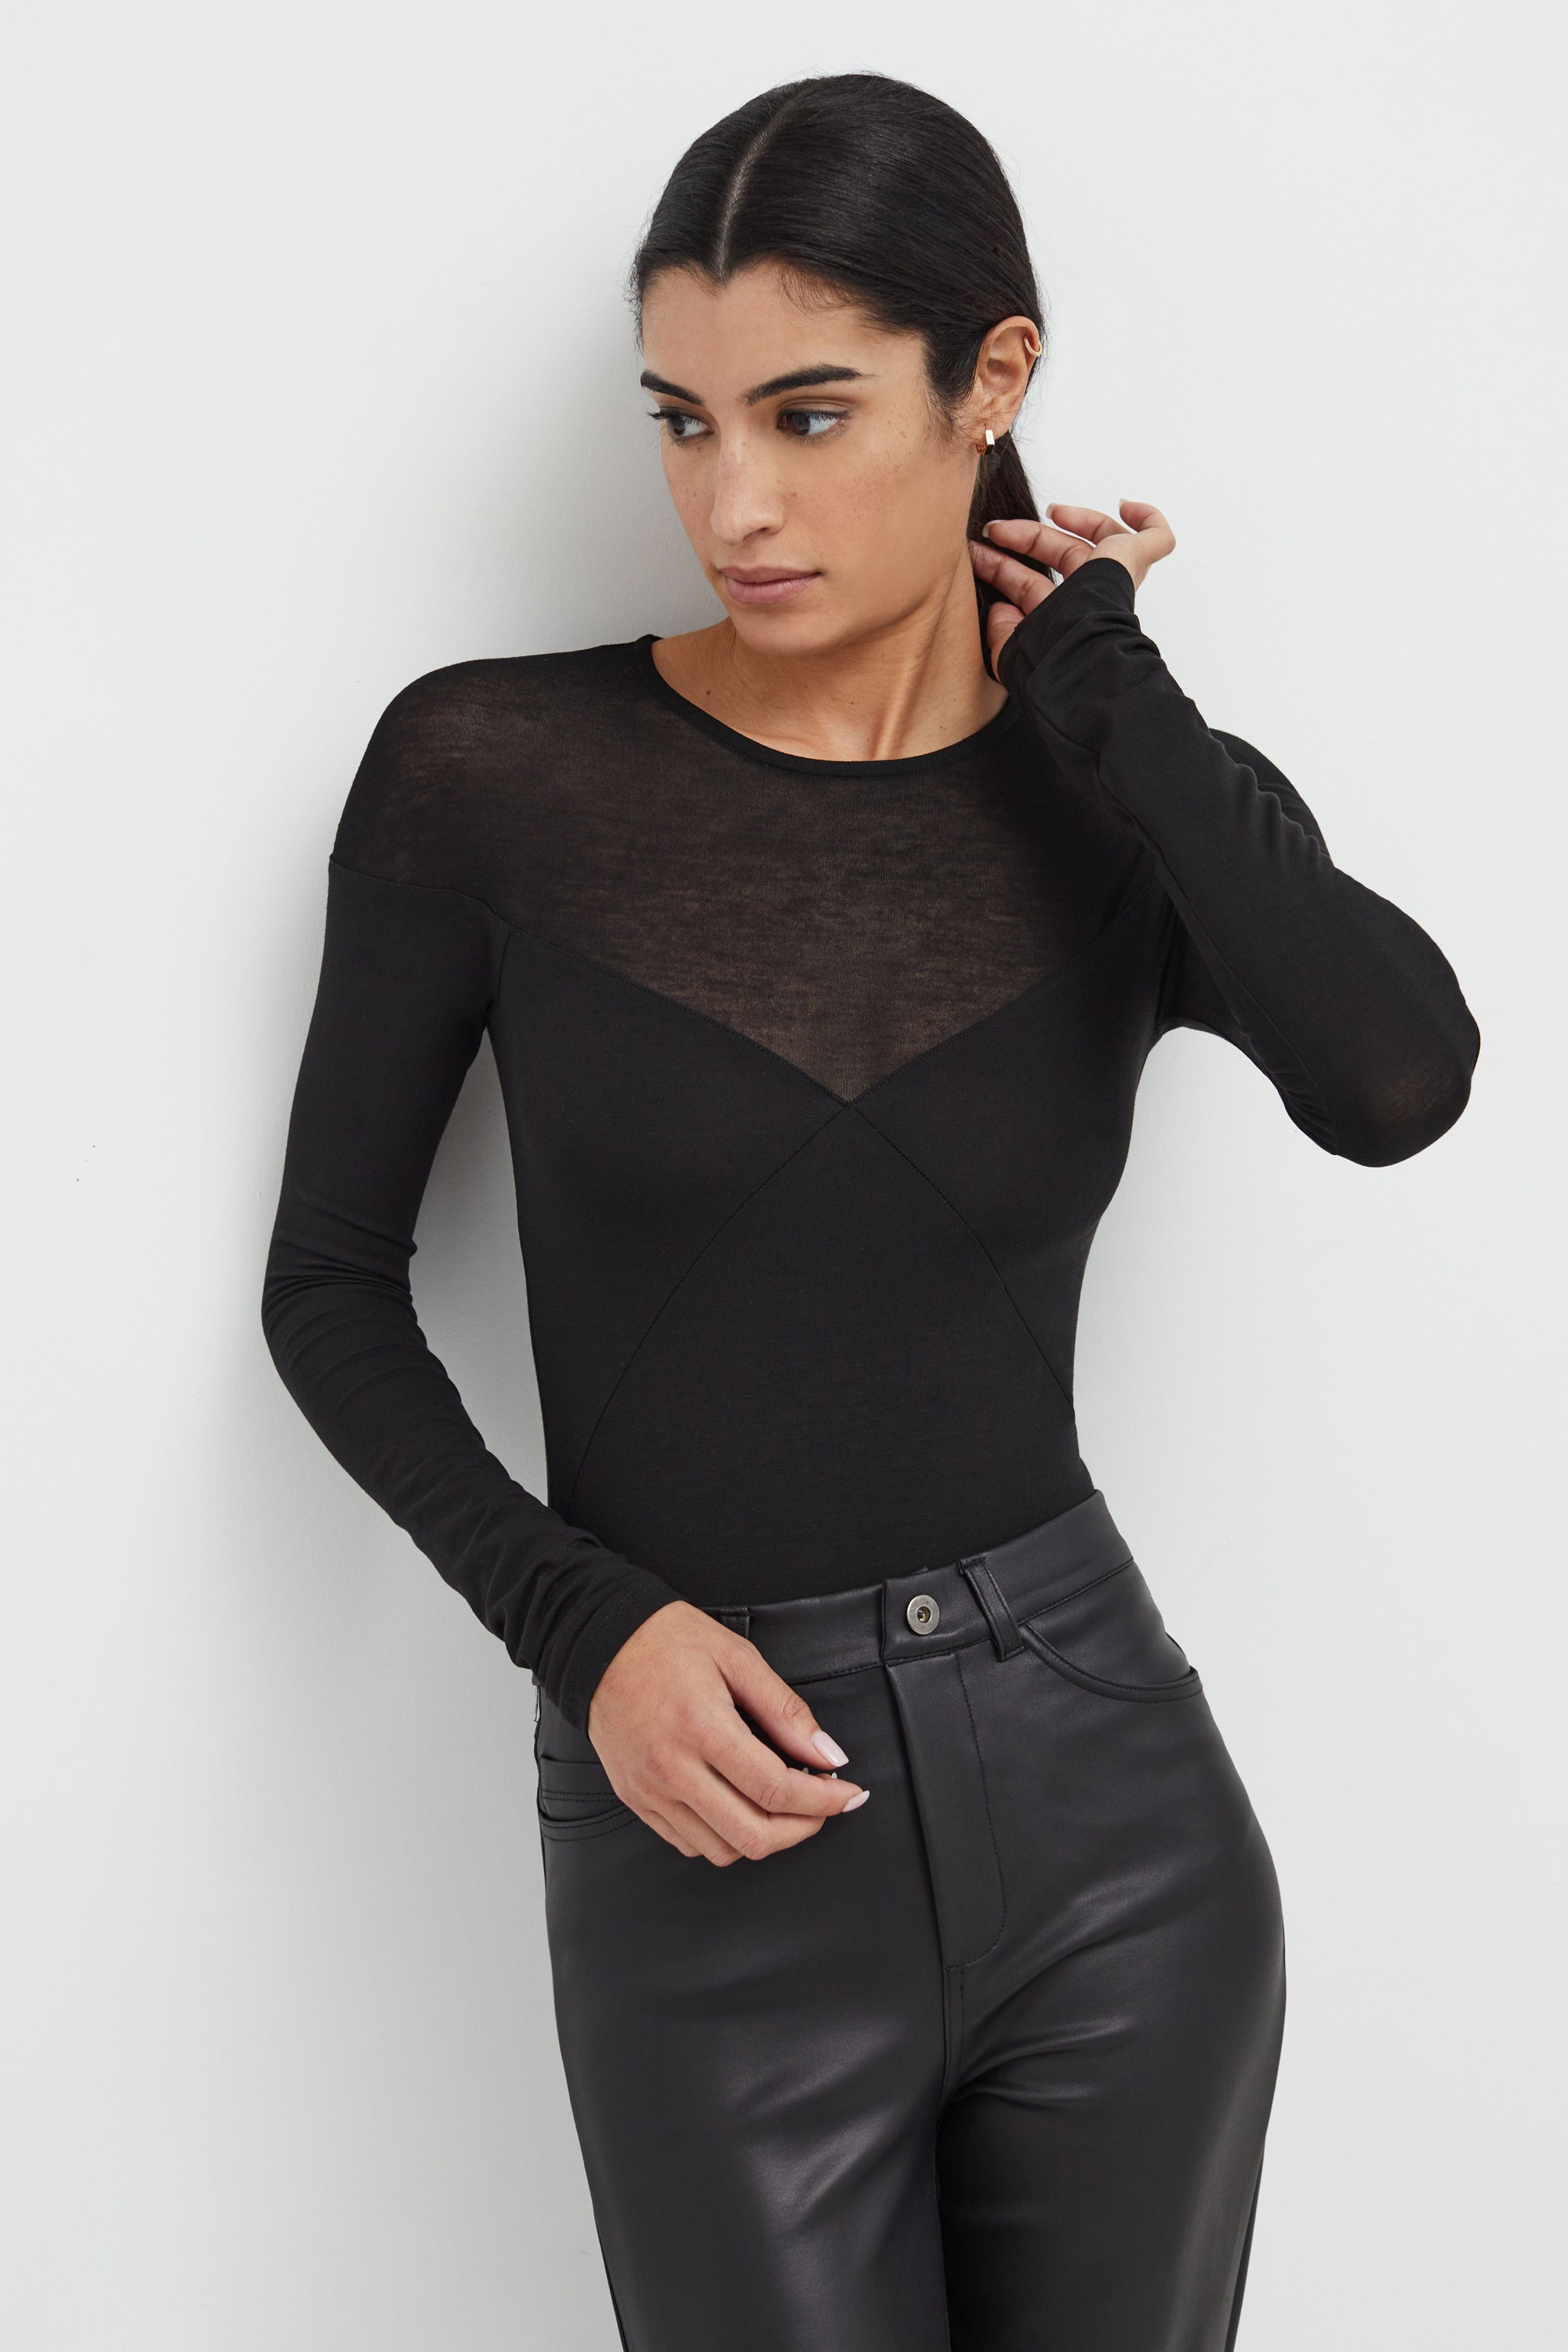 Women's Solid Bodysuit / Long Sleeve V Neck / Double Layer / Leotard Top 